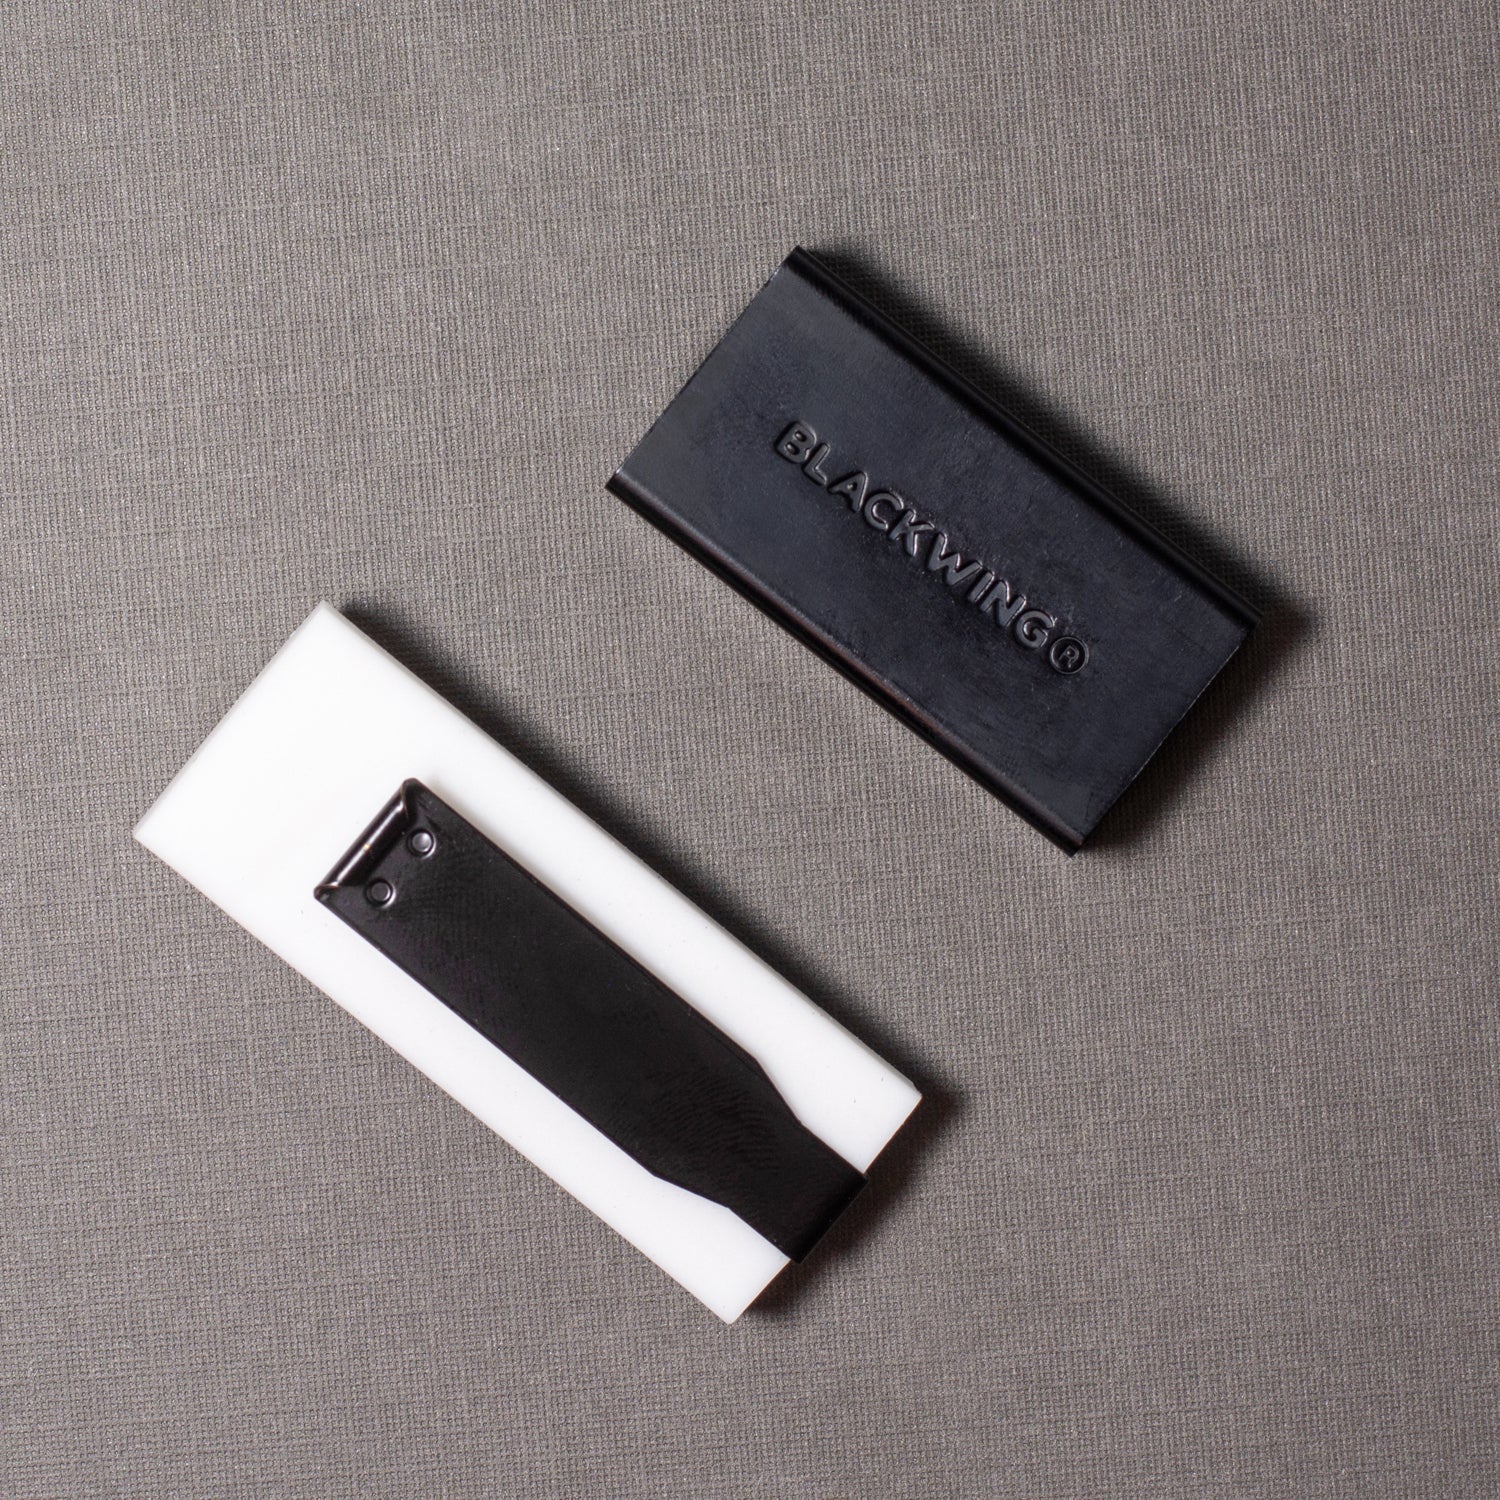 Blackwing Handheld Eraser Replacements